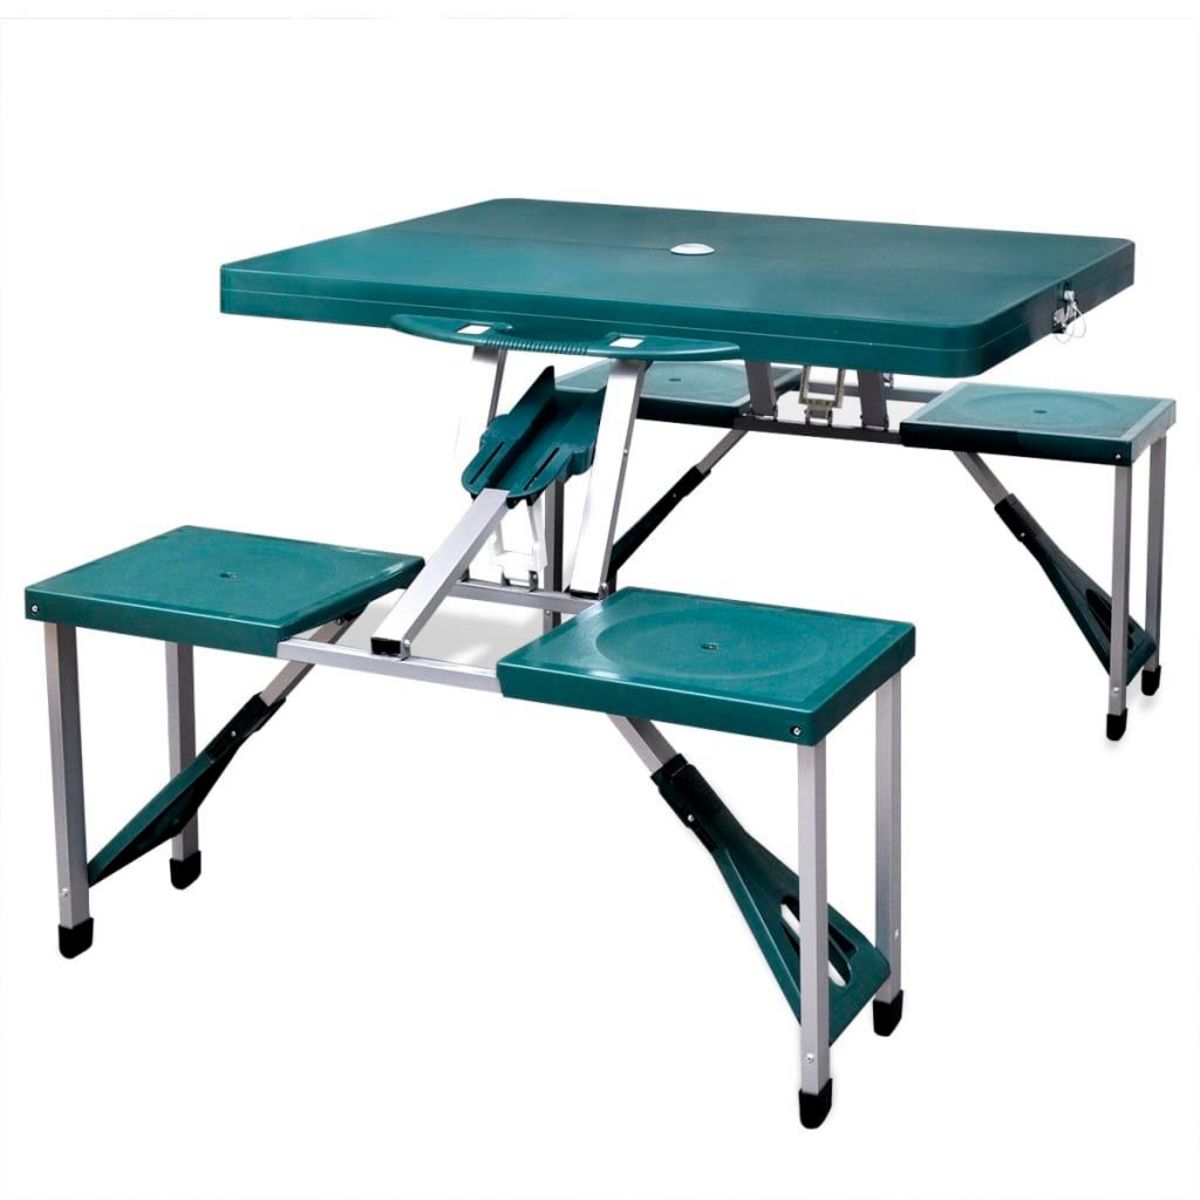 VIDAXL Table de pique-nique verte pliante a 4 sieges legere en aluminium